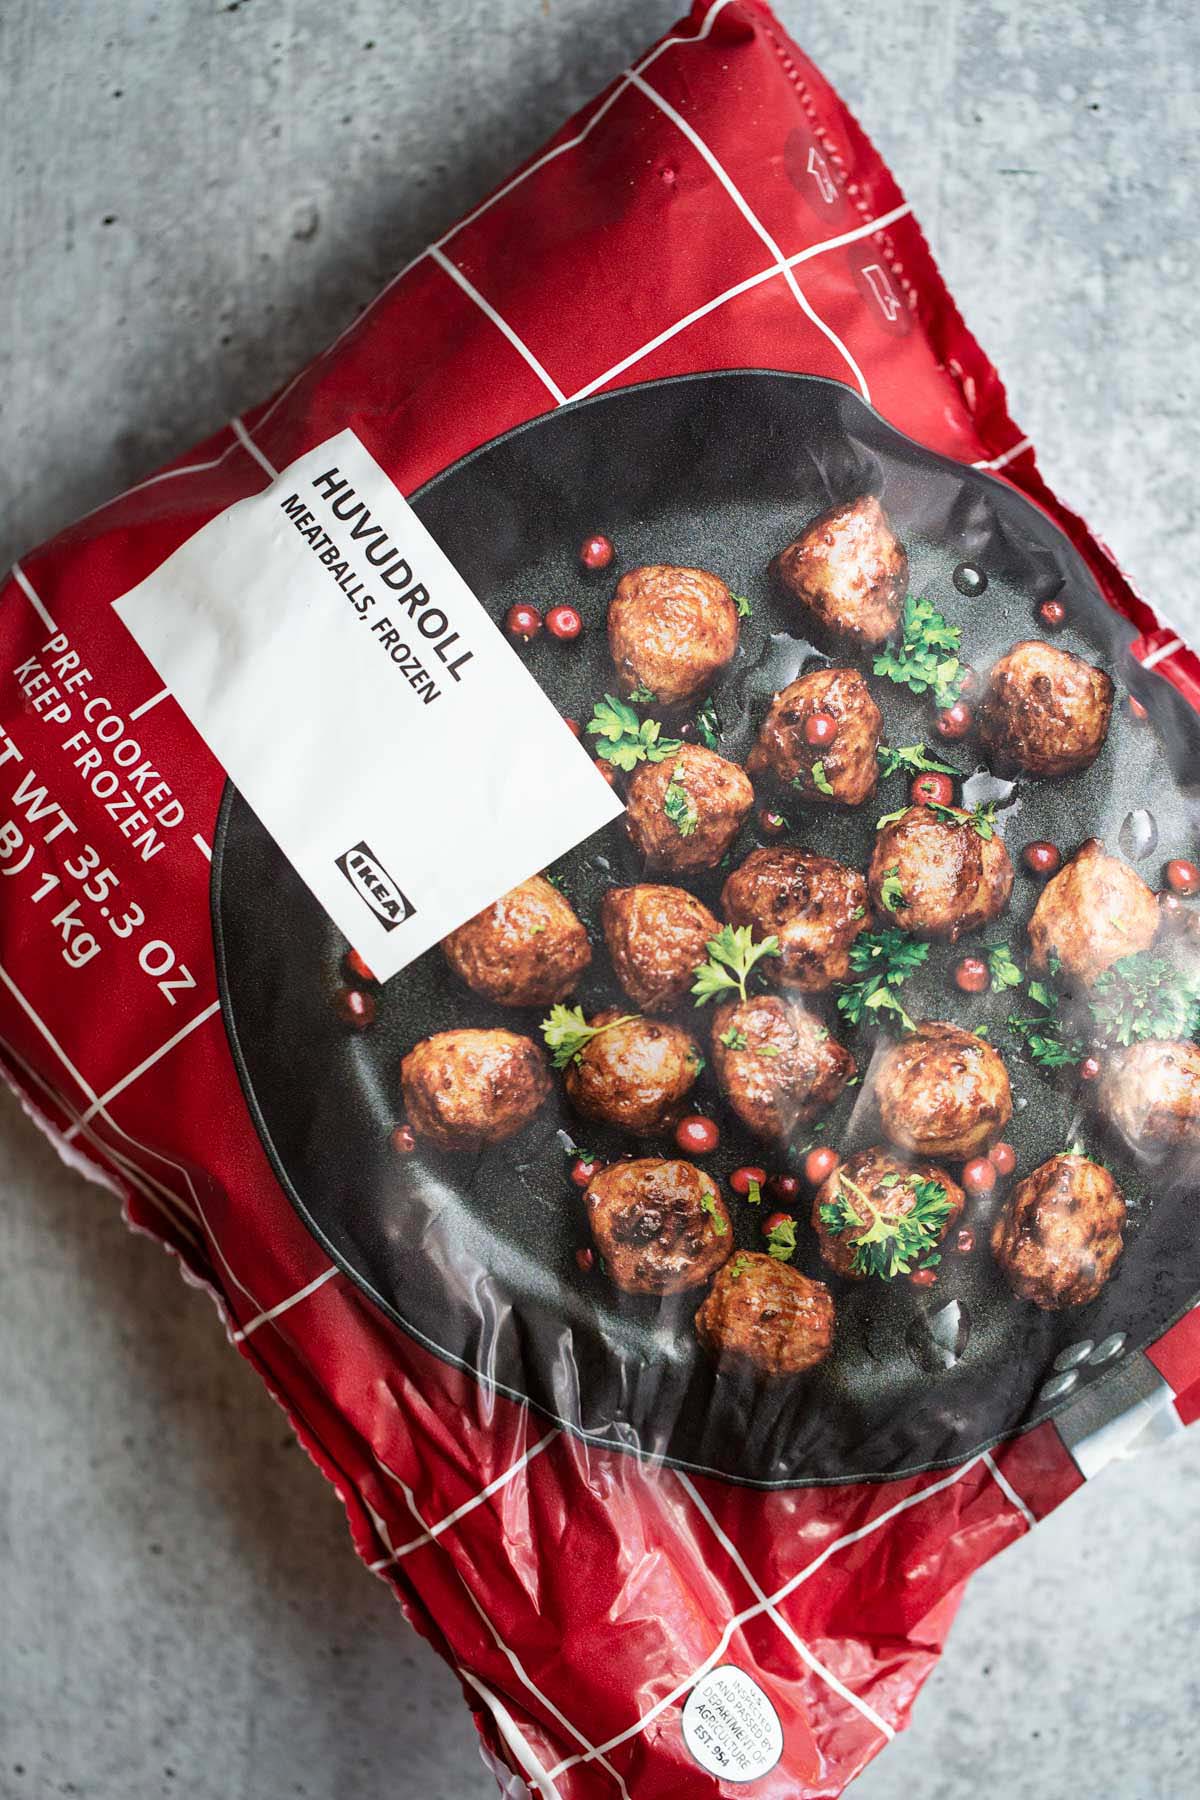 Bag of Swedish meatballs